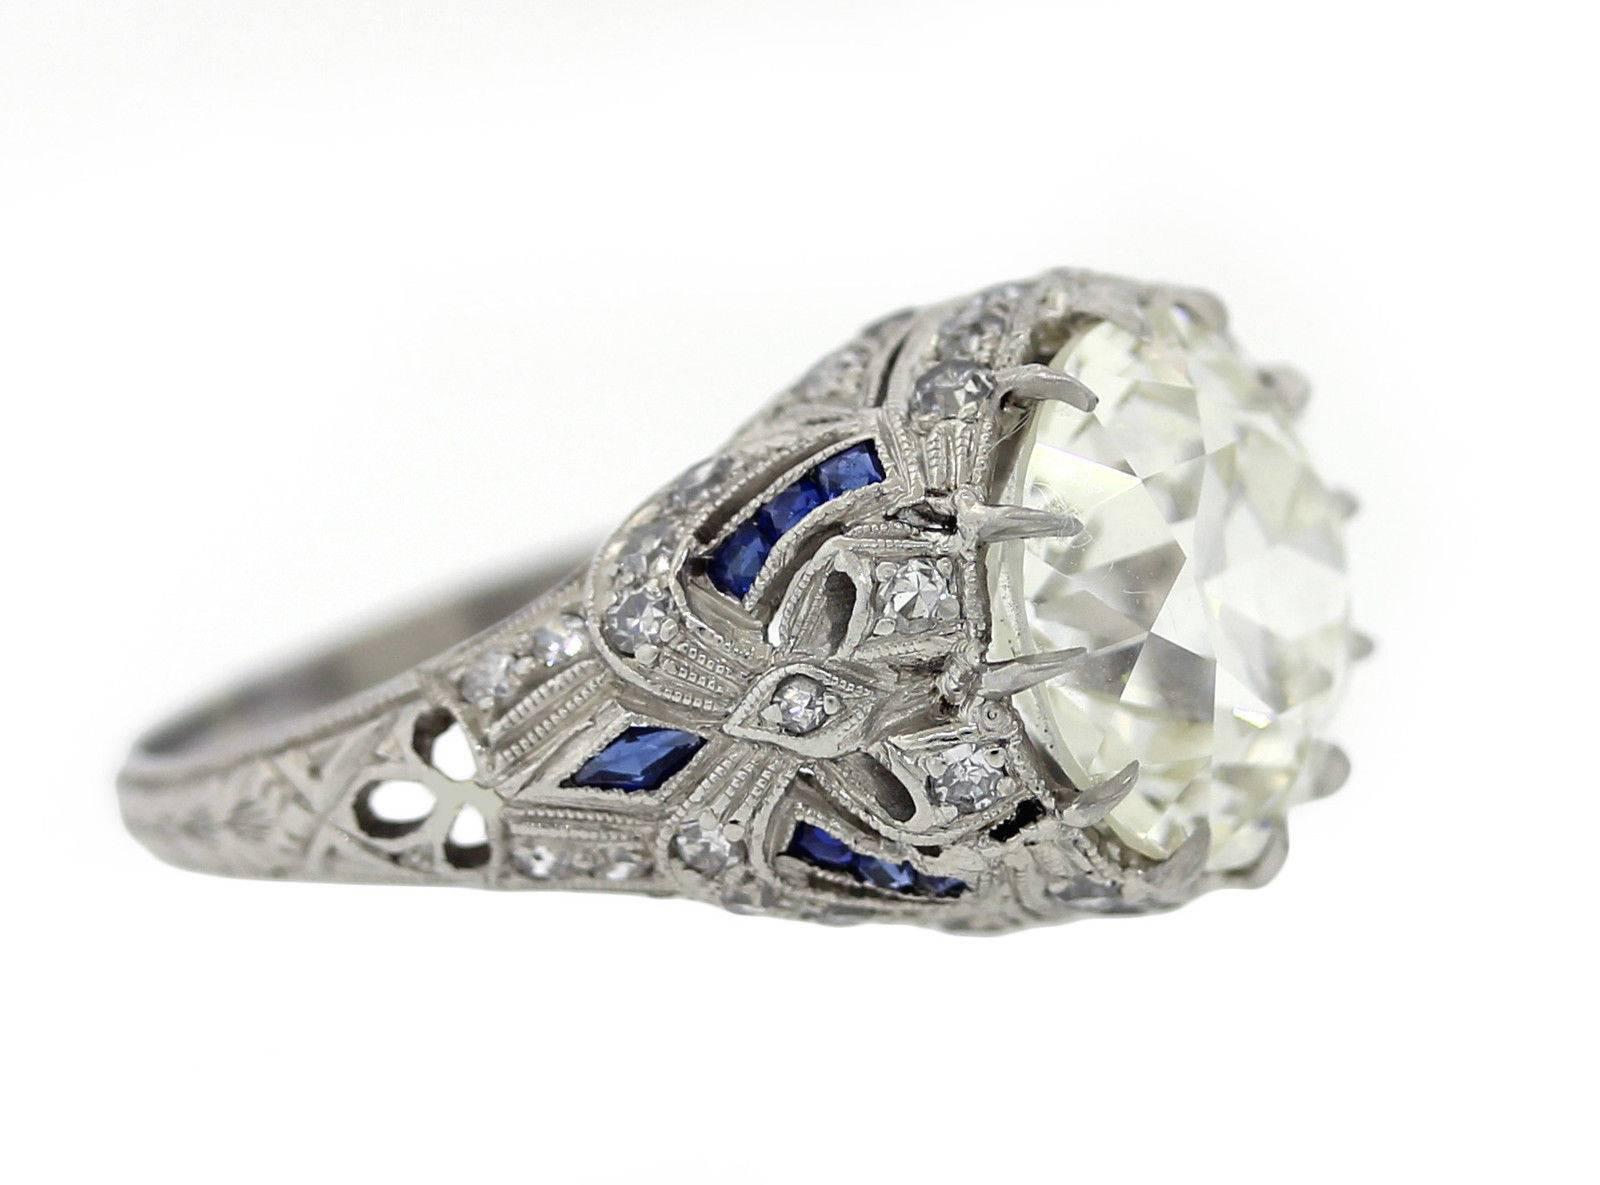 1920s Antique Art Deco Filigree Platinum 5.48ct Diamond Sapphire Engagement Ring For Sale 1